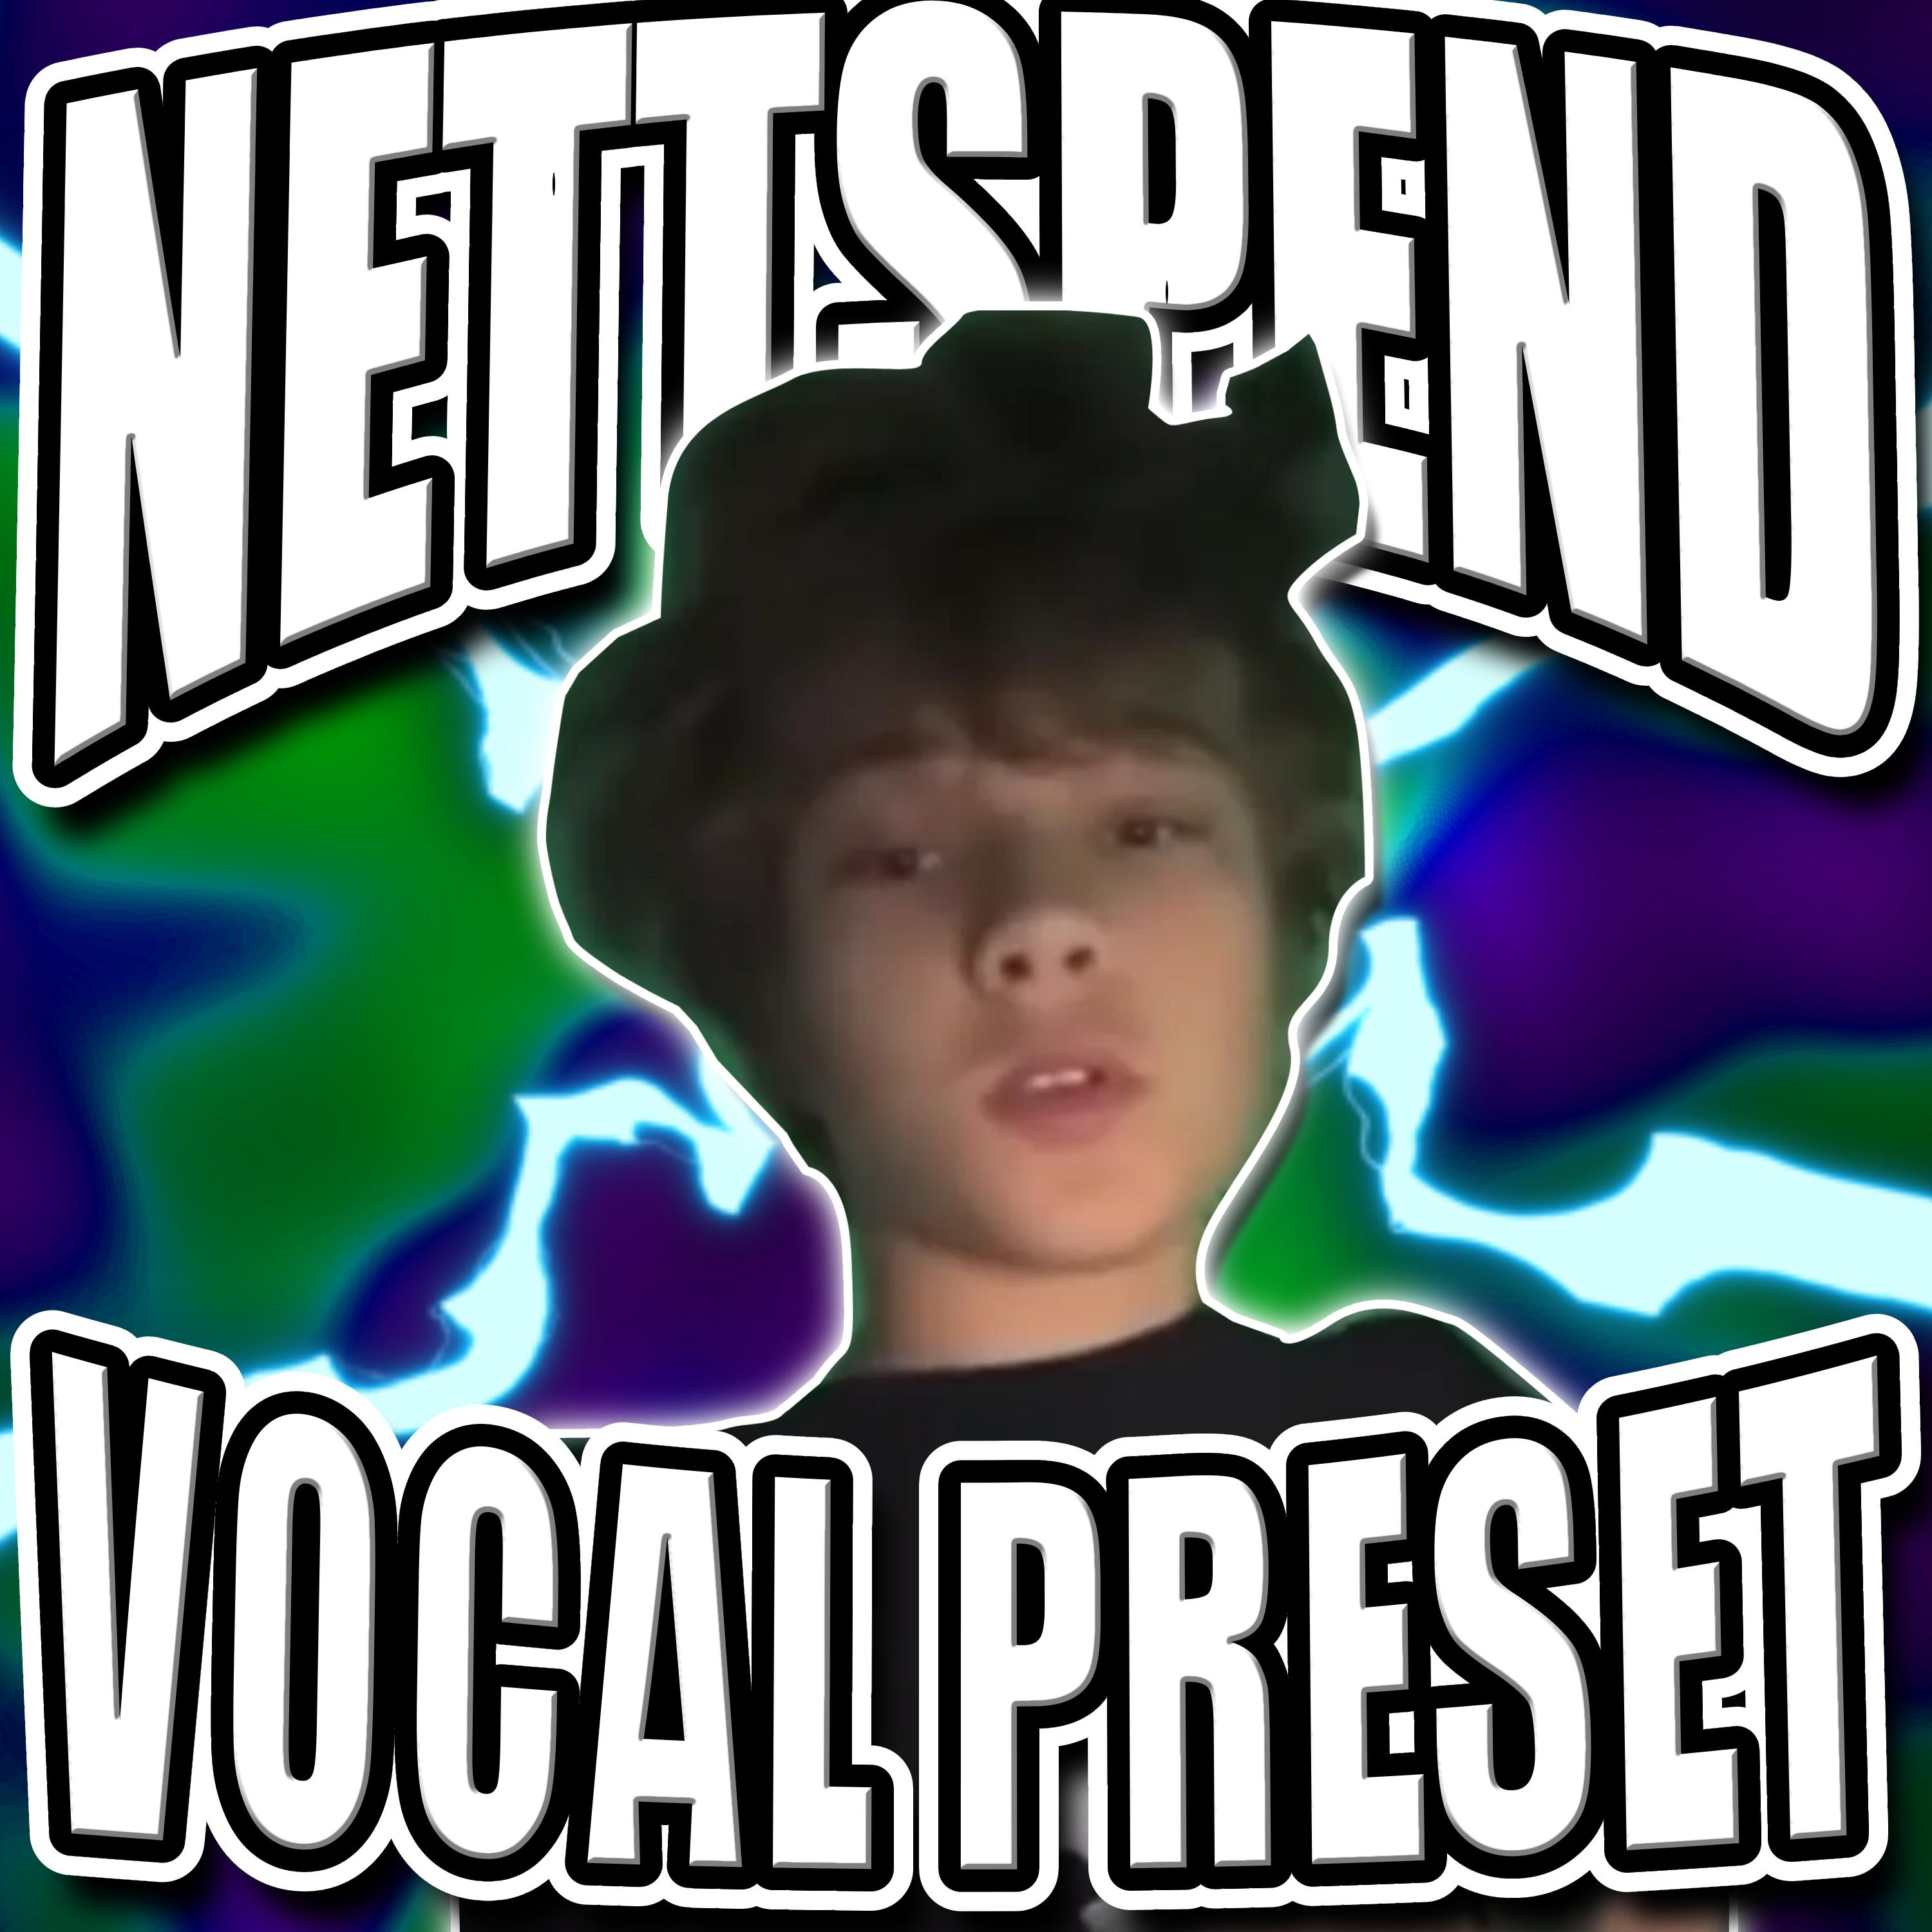 Nettspend Vocal Preset